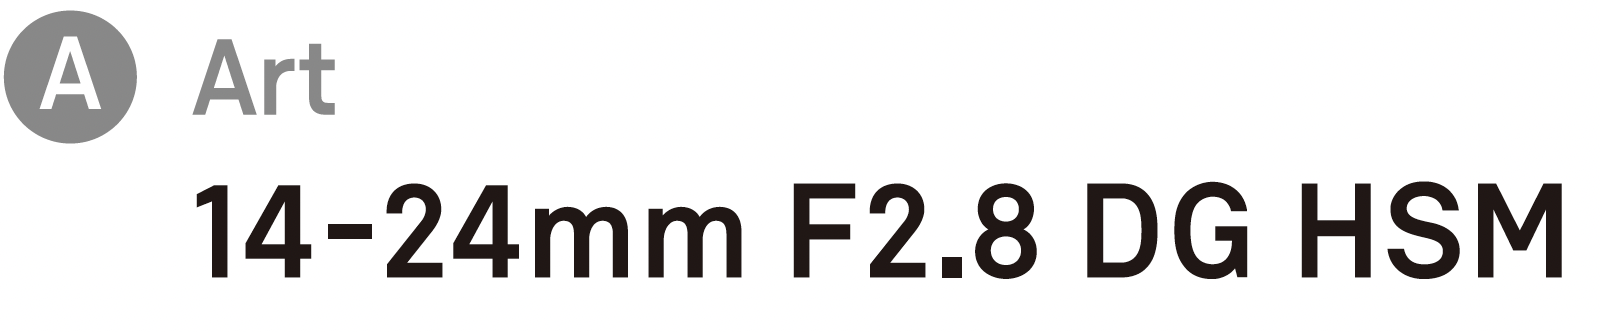 14-24mm F2.8 DG HSM